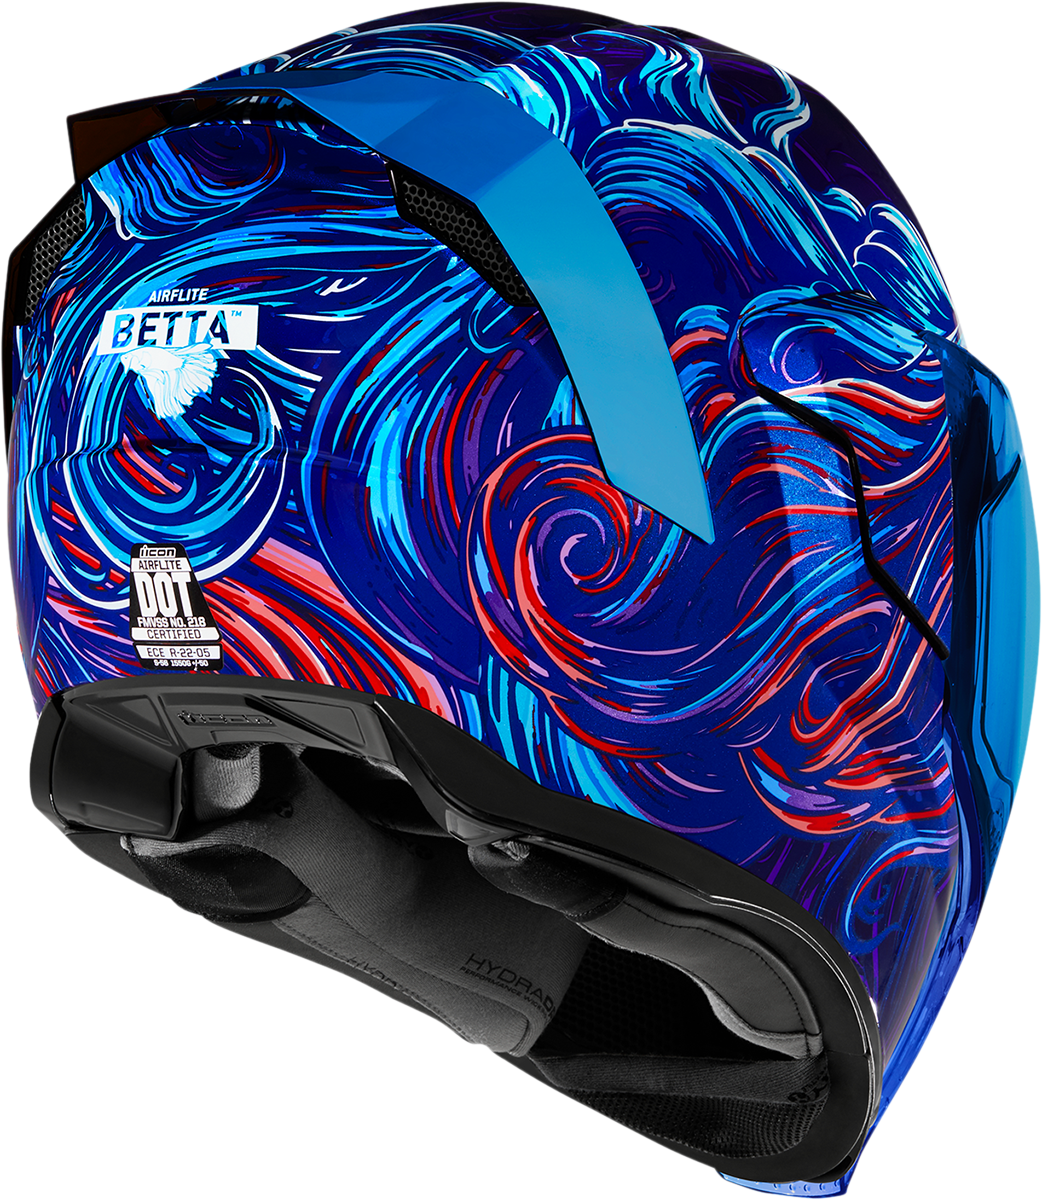 ICON Airflite* Helmet - Betta - Blue - 3XL 0101-14712